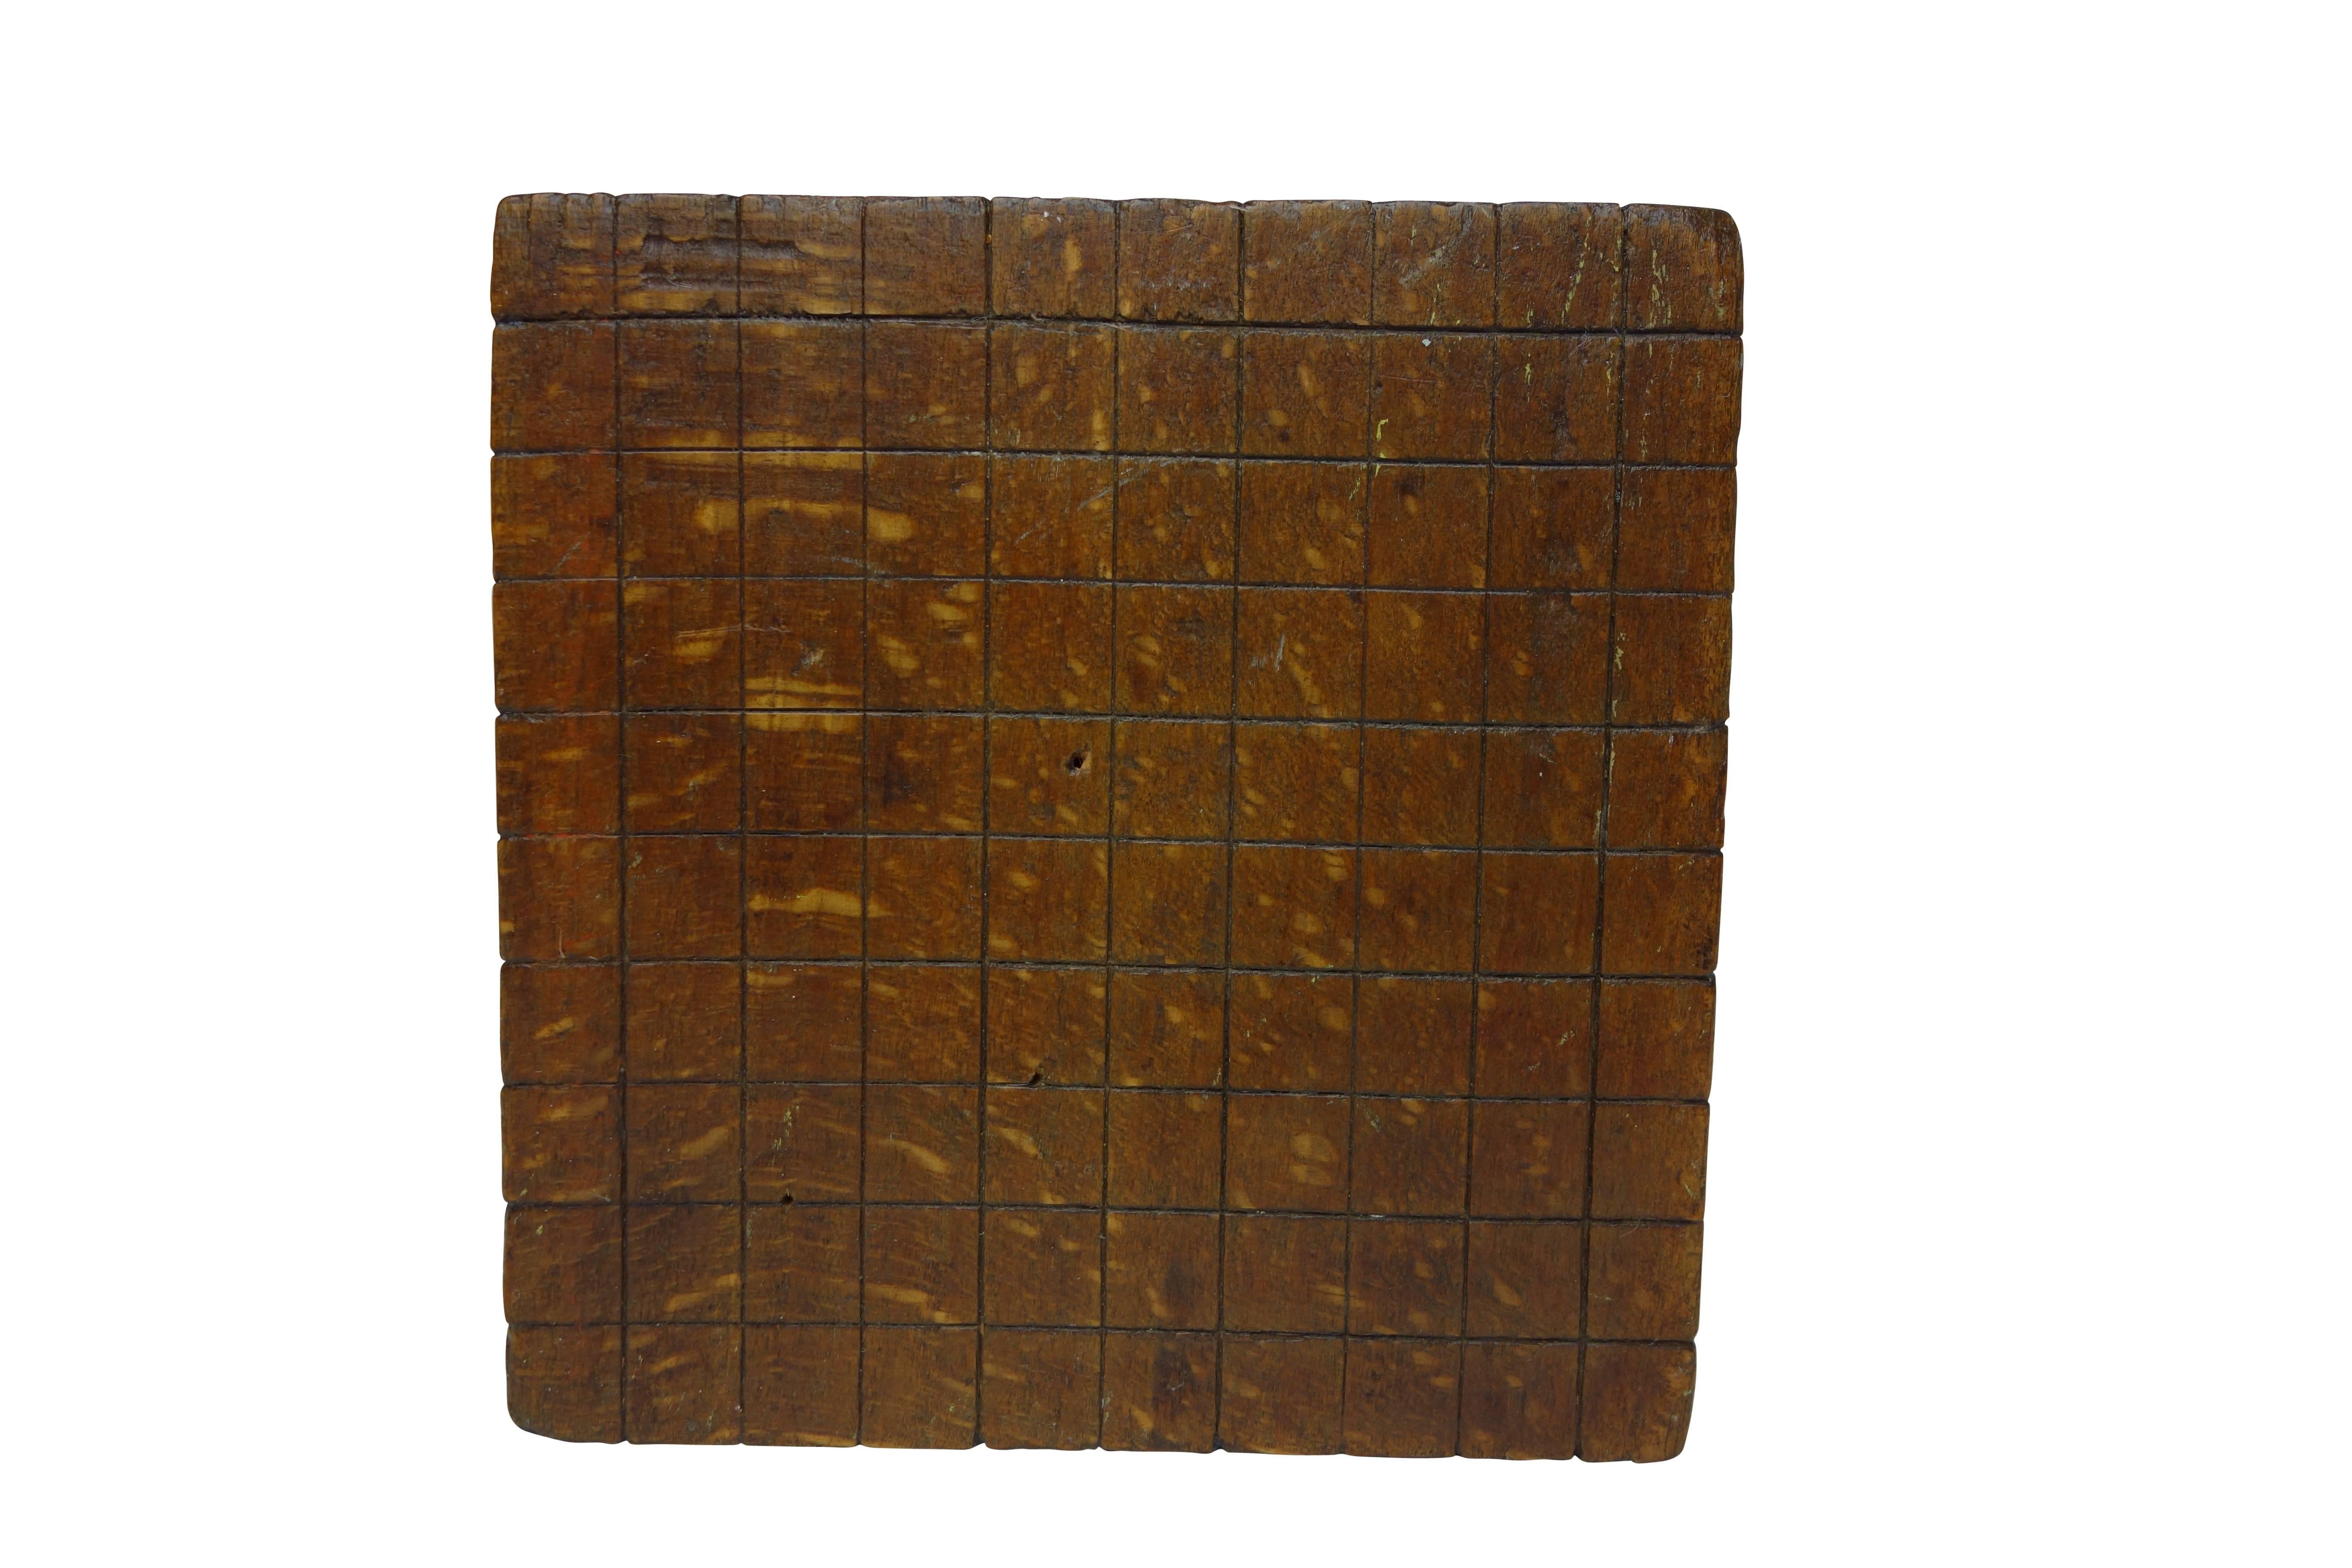 20th Century Wood “Base Ten” Cube Educational Model